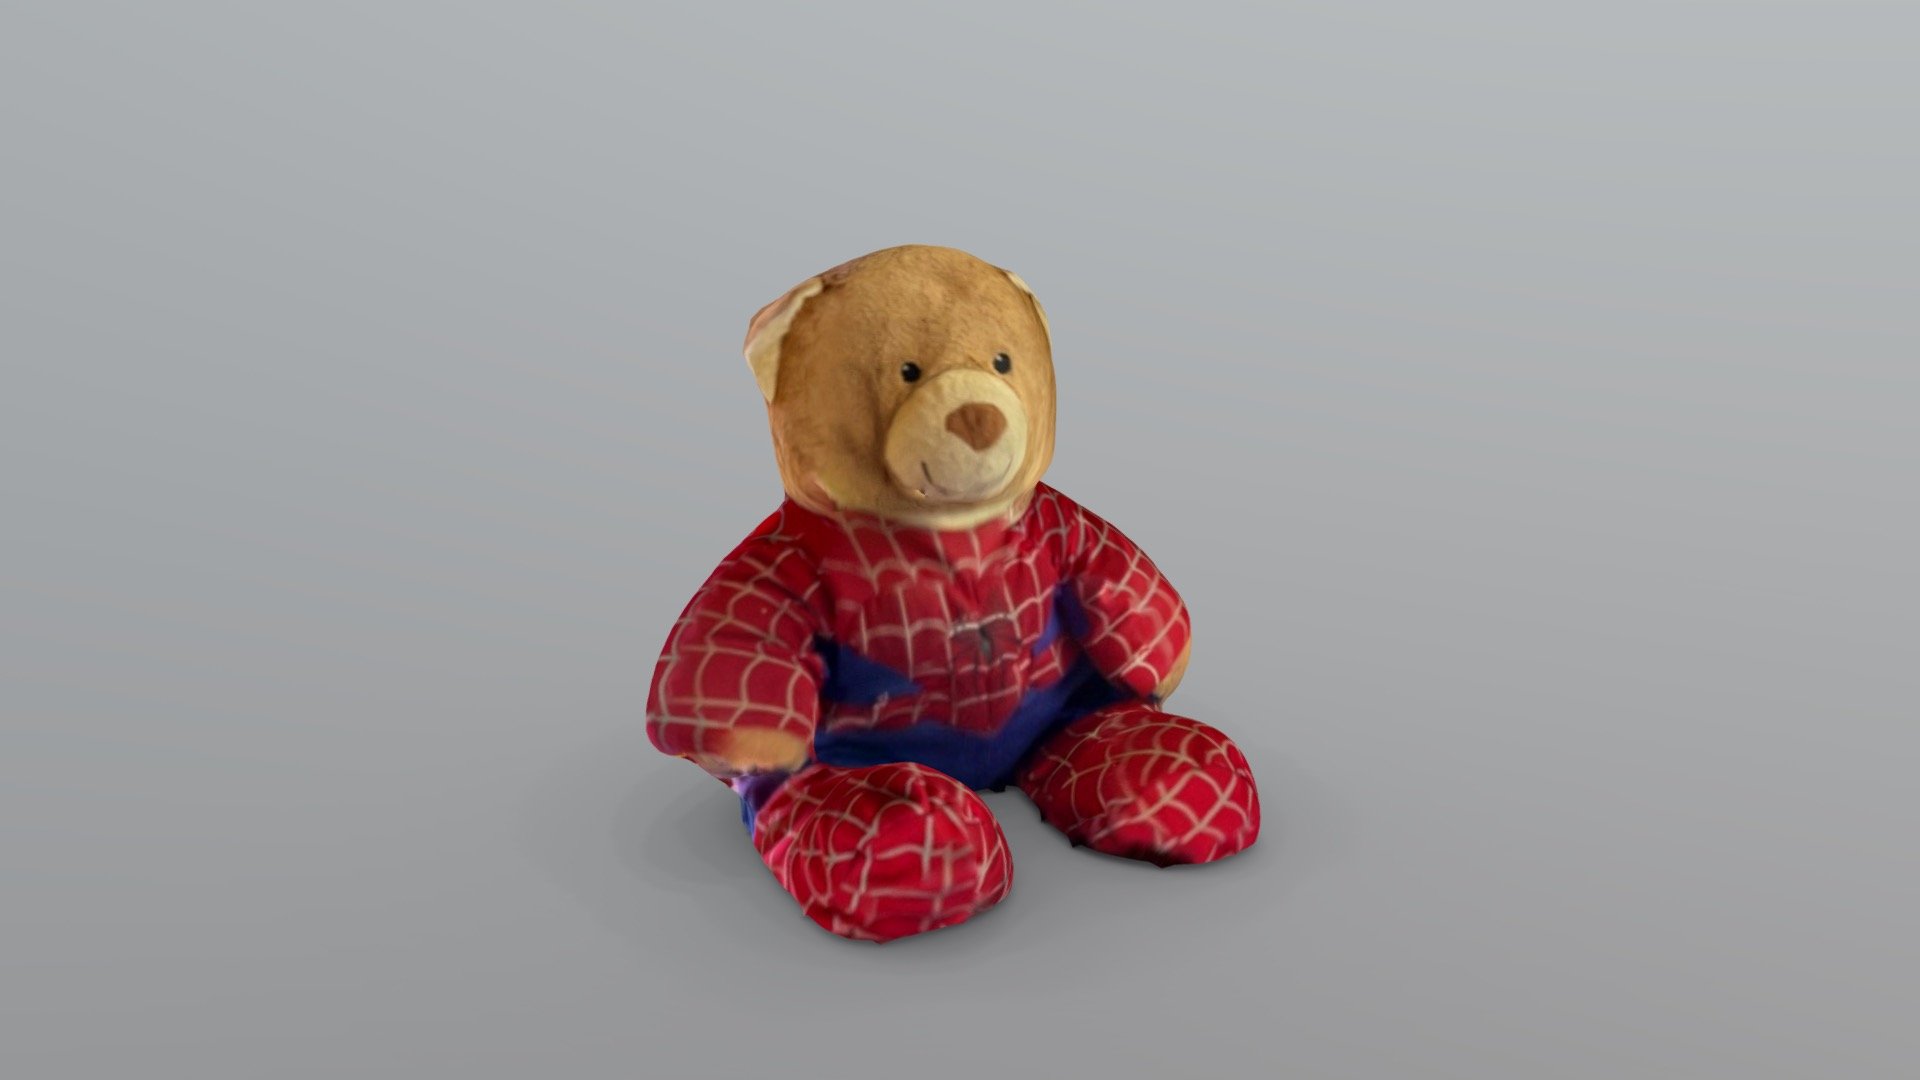 Spider costume stuffed bear